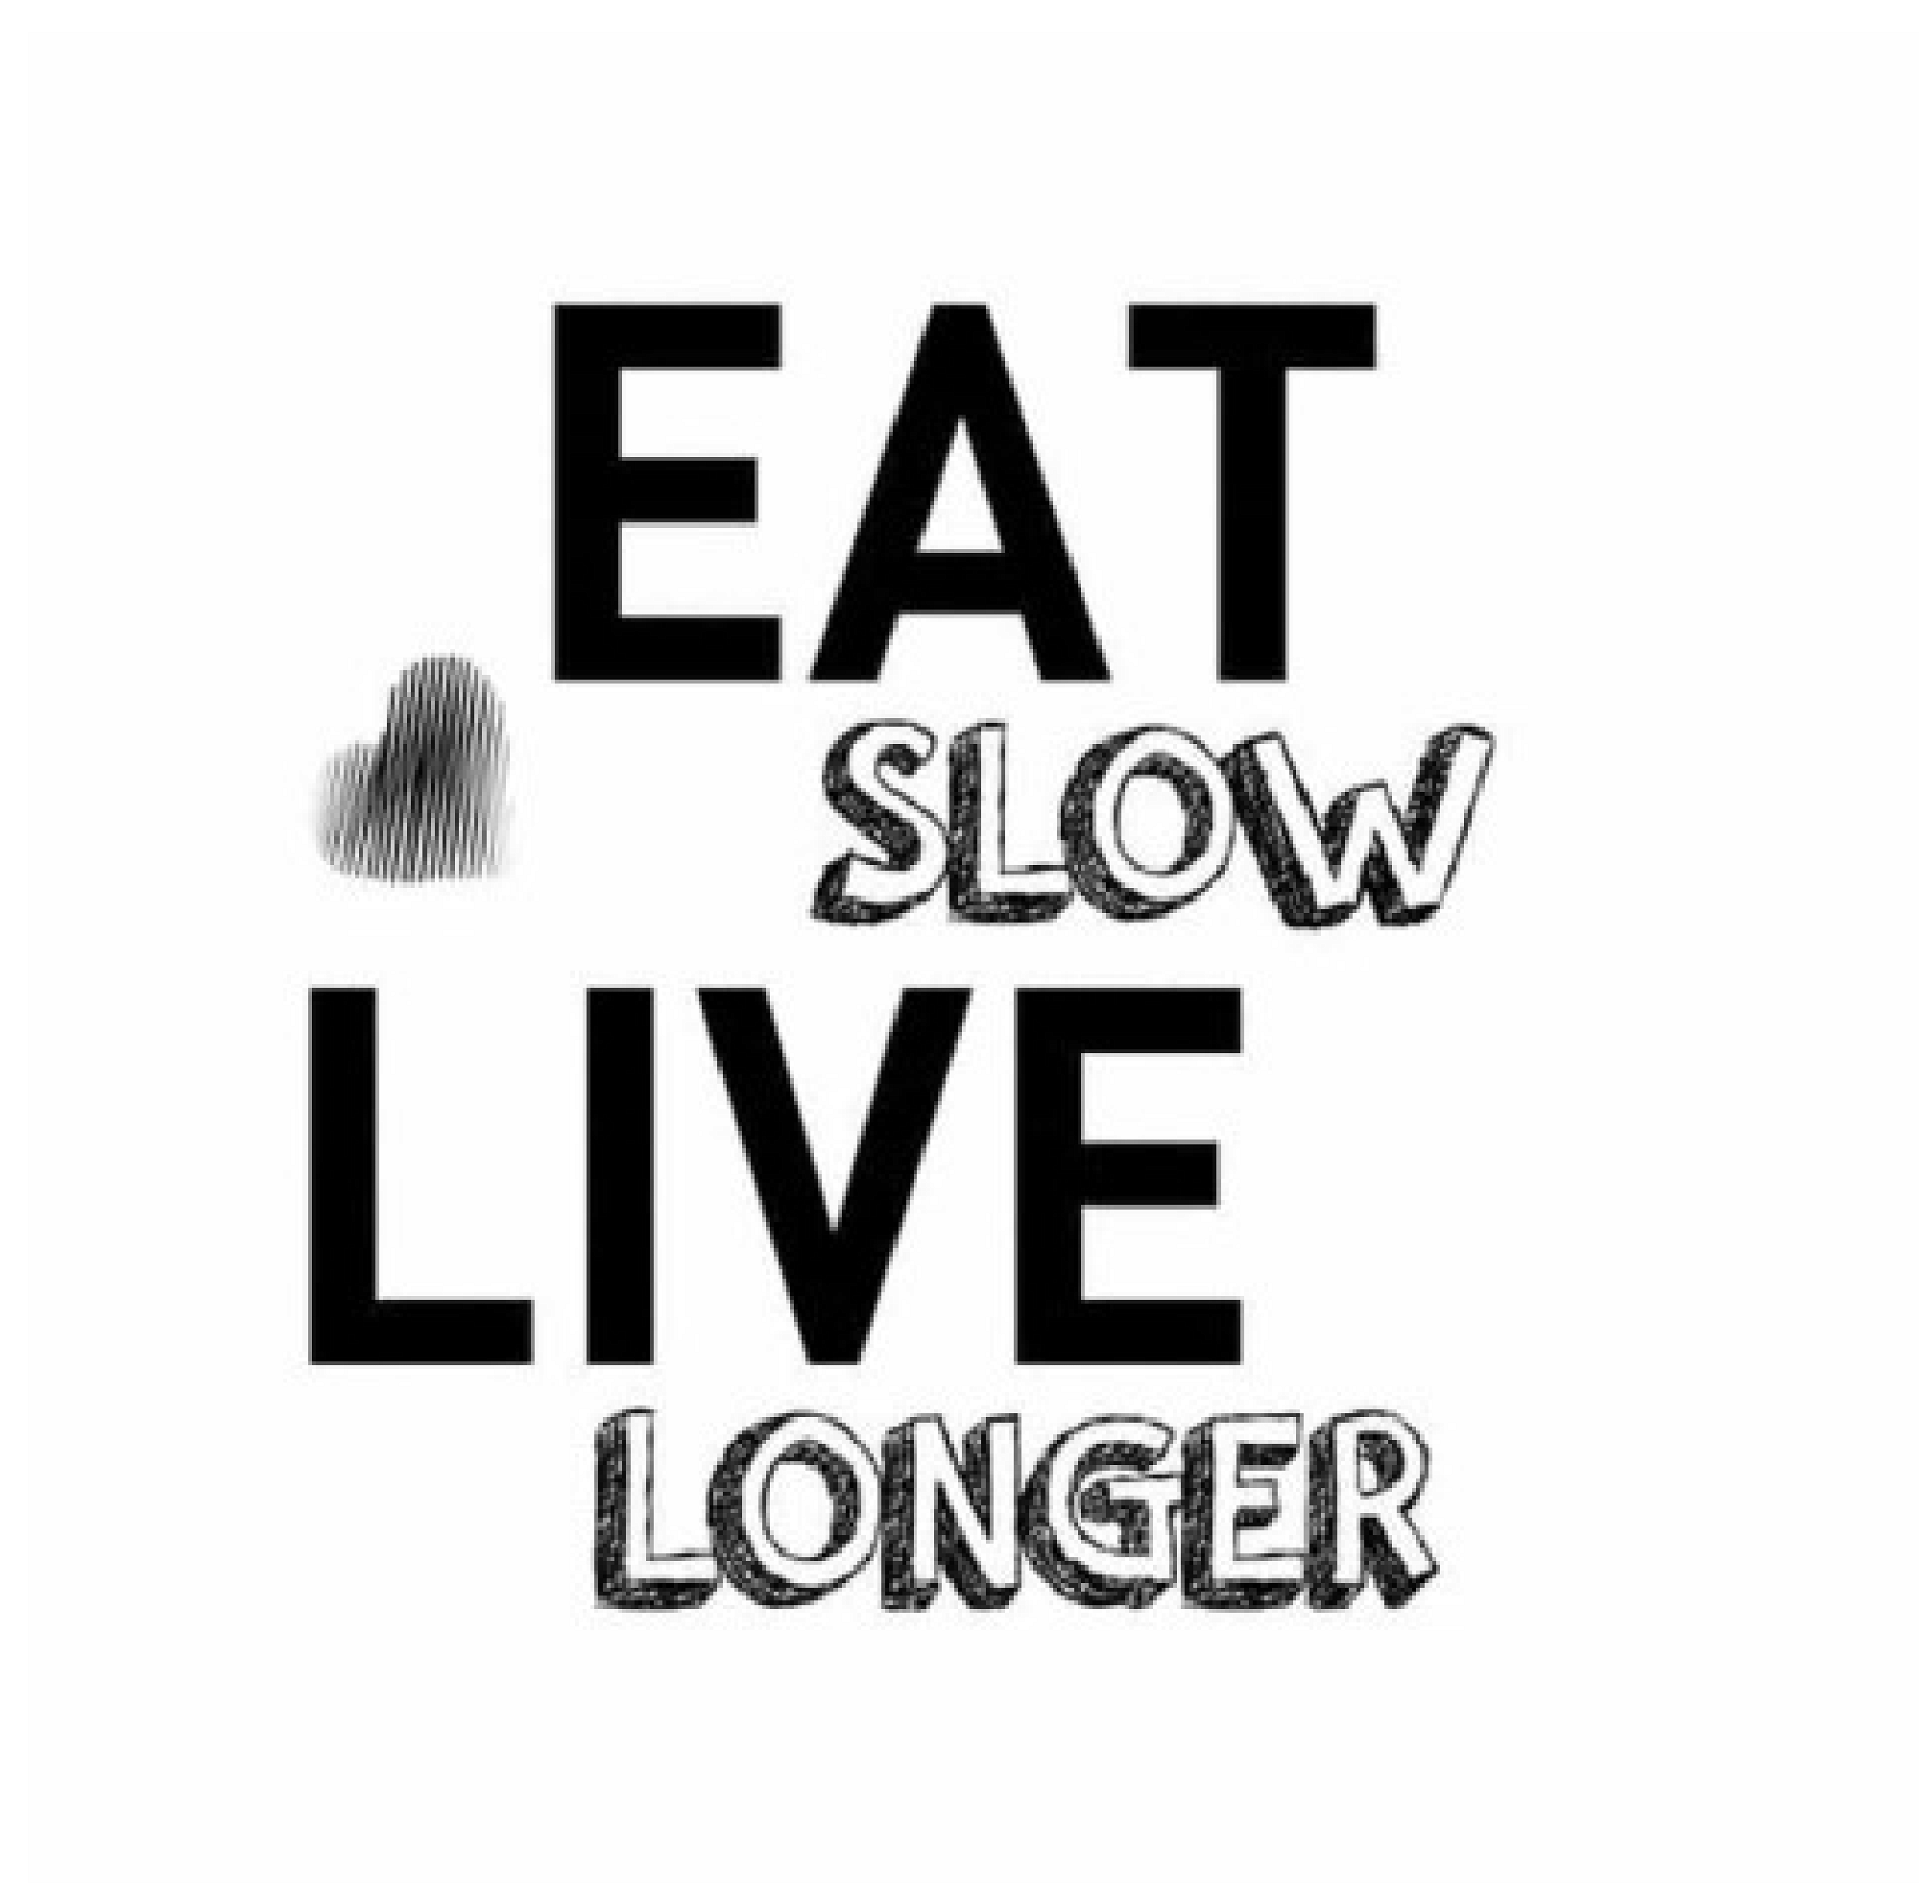 Eat Slow Live Longer